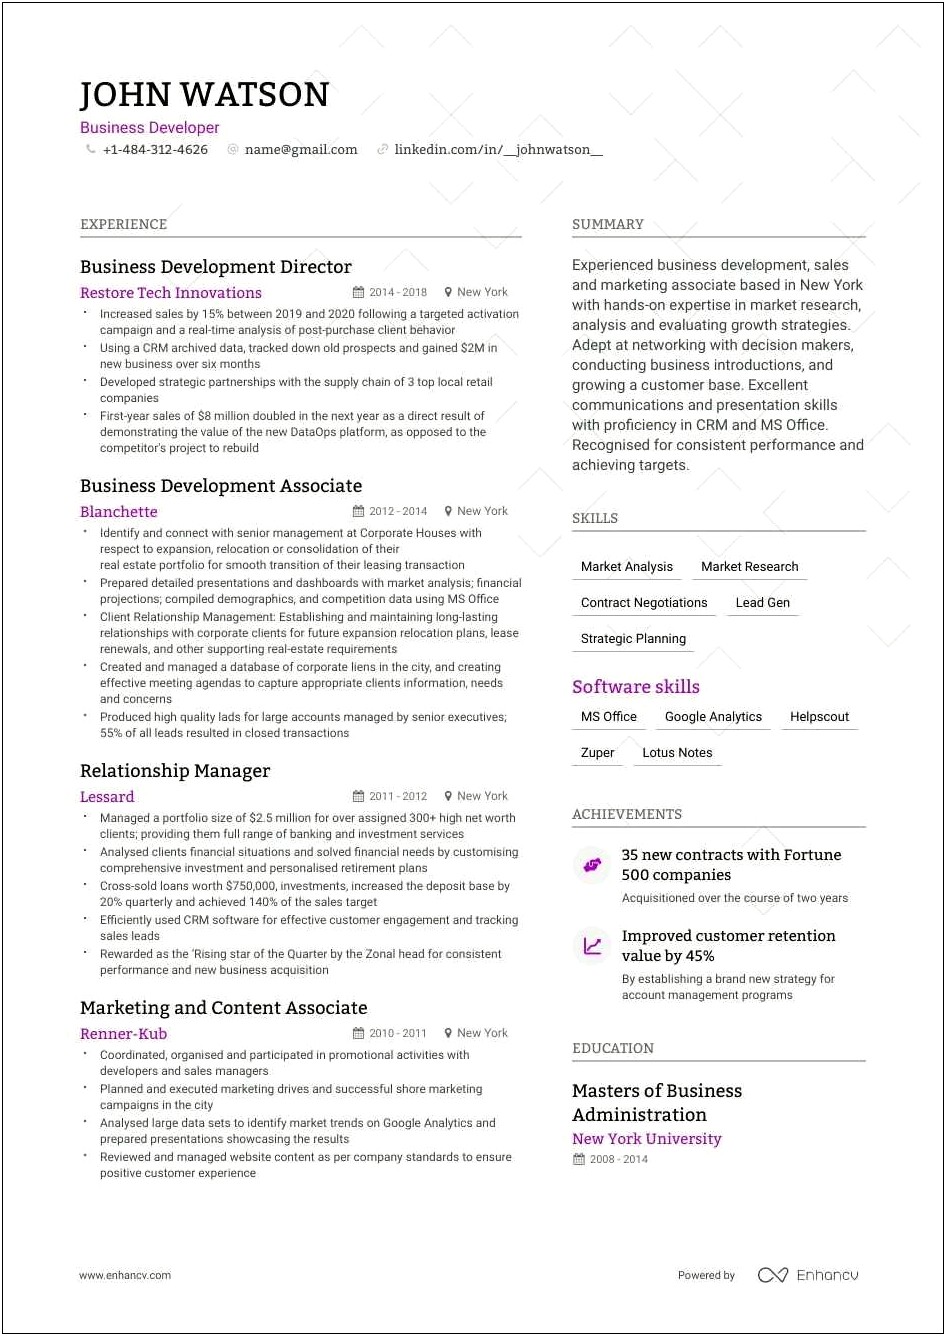 Corporate Communications Resume Summary Sample